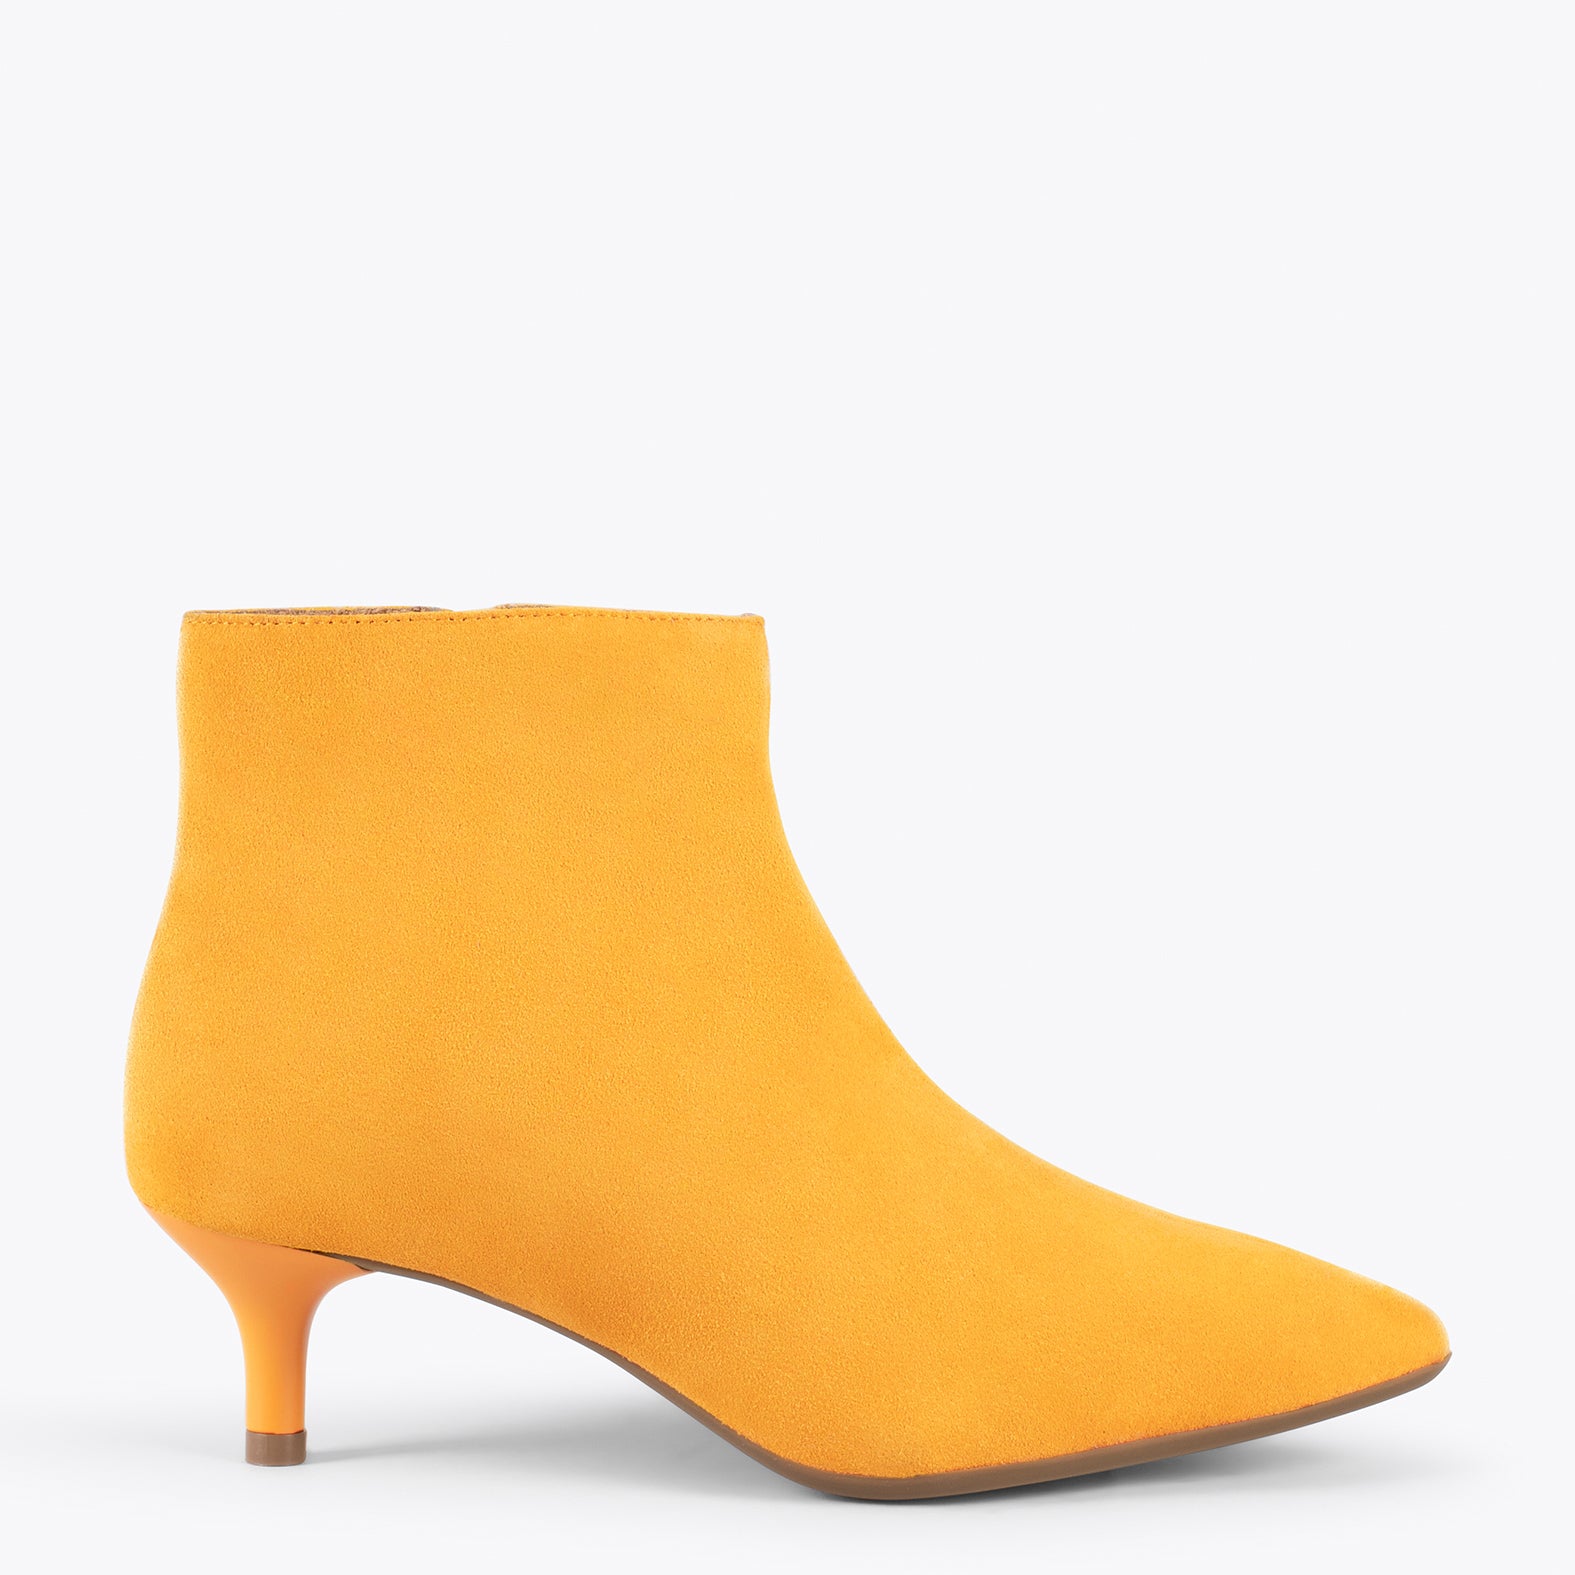 OUTFIT – YELLOW elegant low heel booties